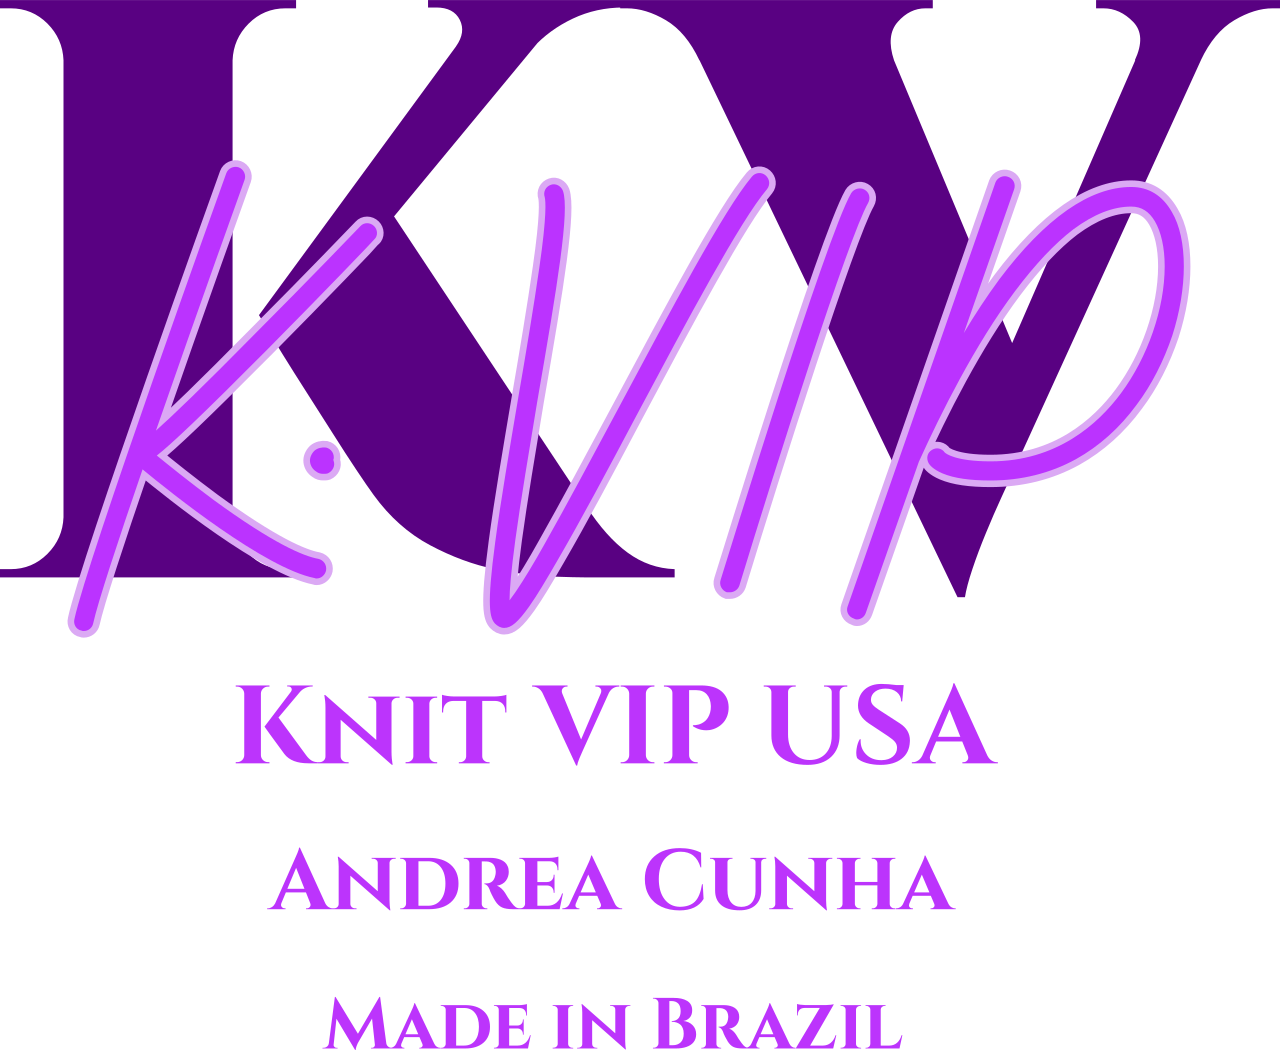 K. VIP's web page